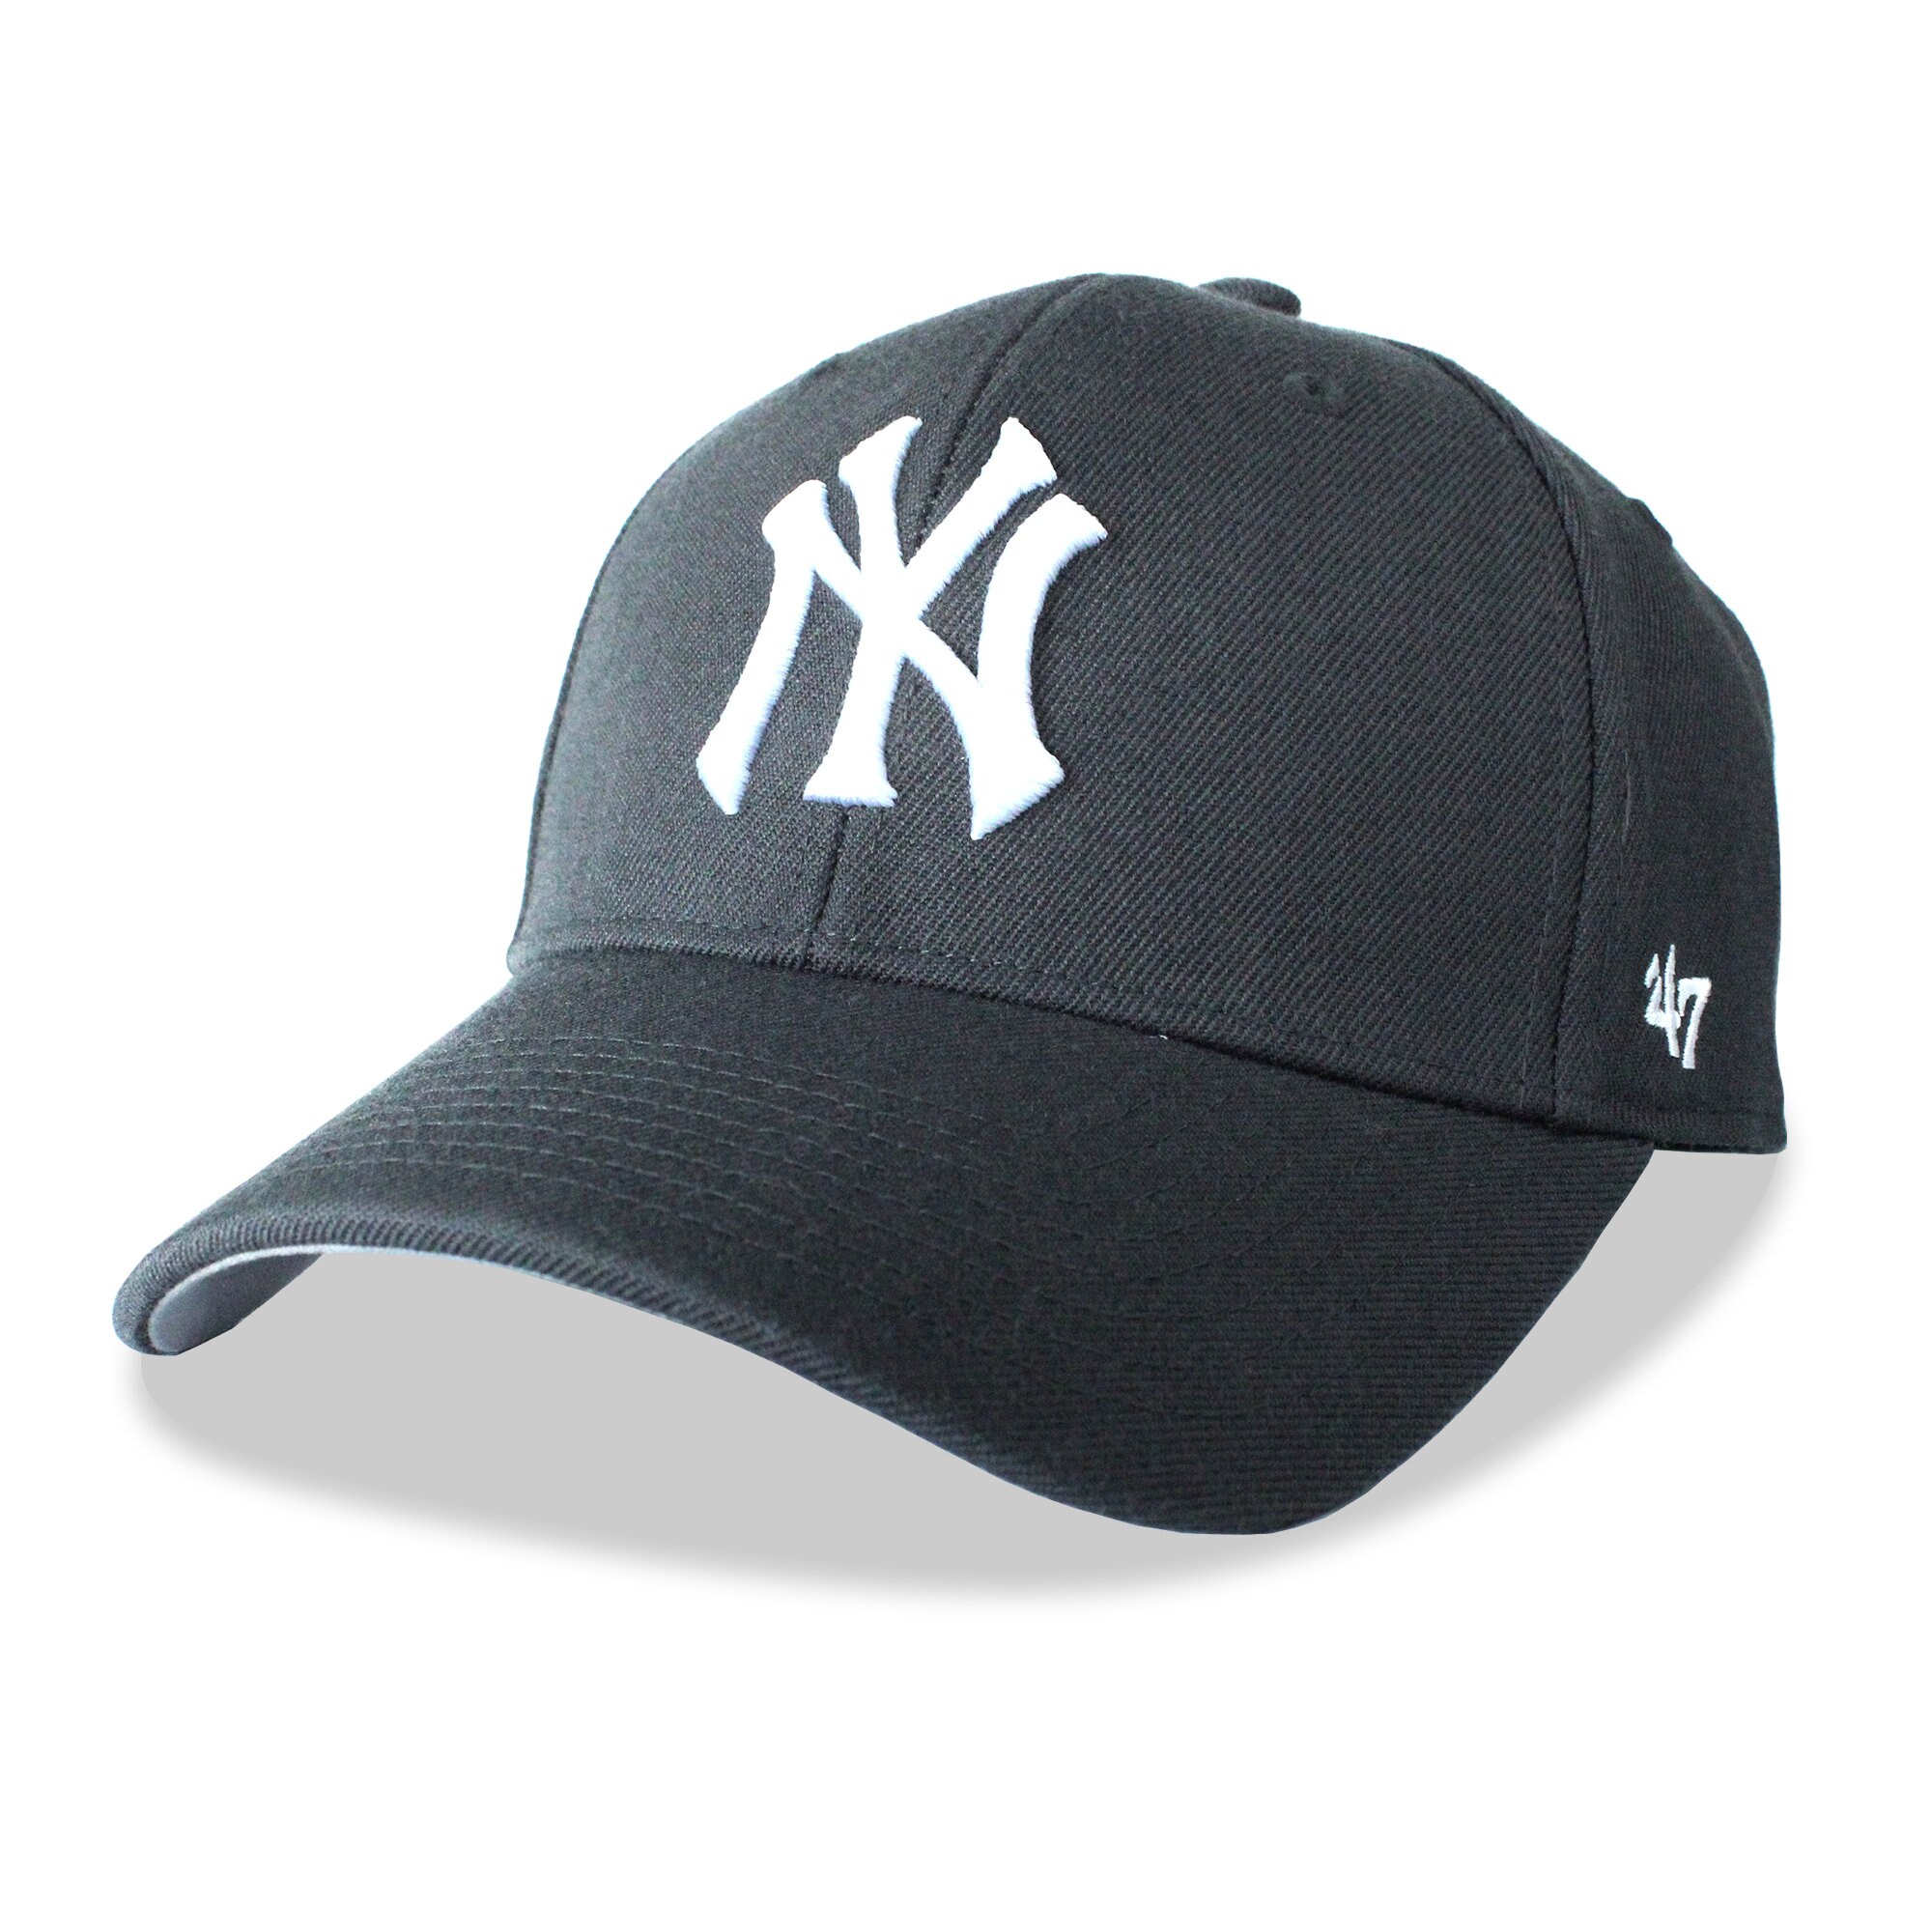 NWS New York Yankees '47 MVP Red Strapback Hat MLB